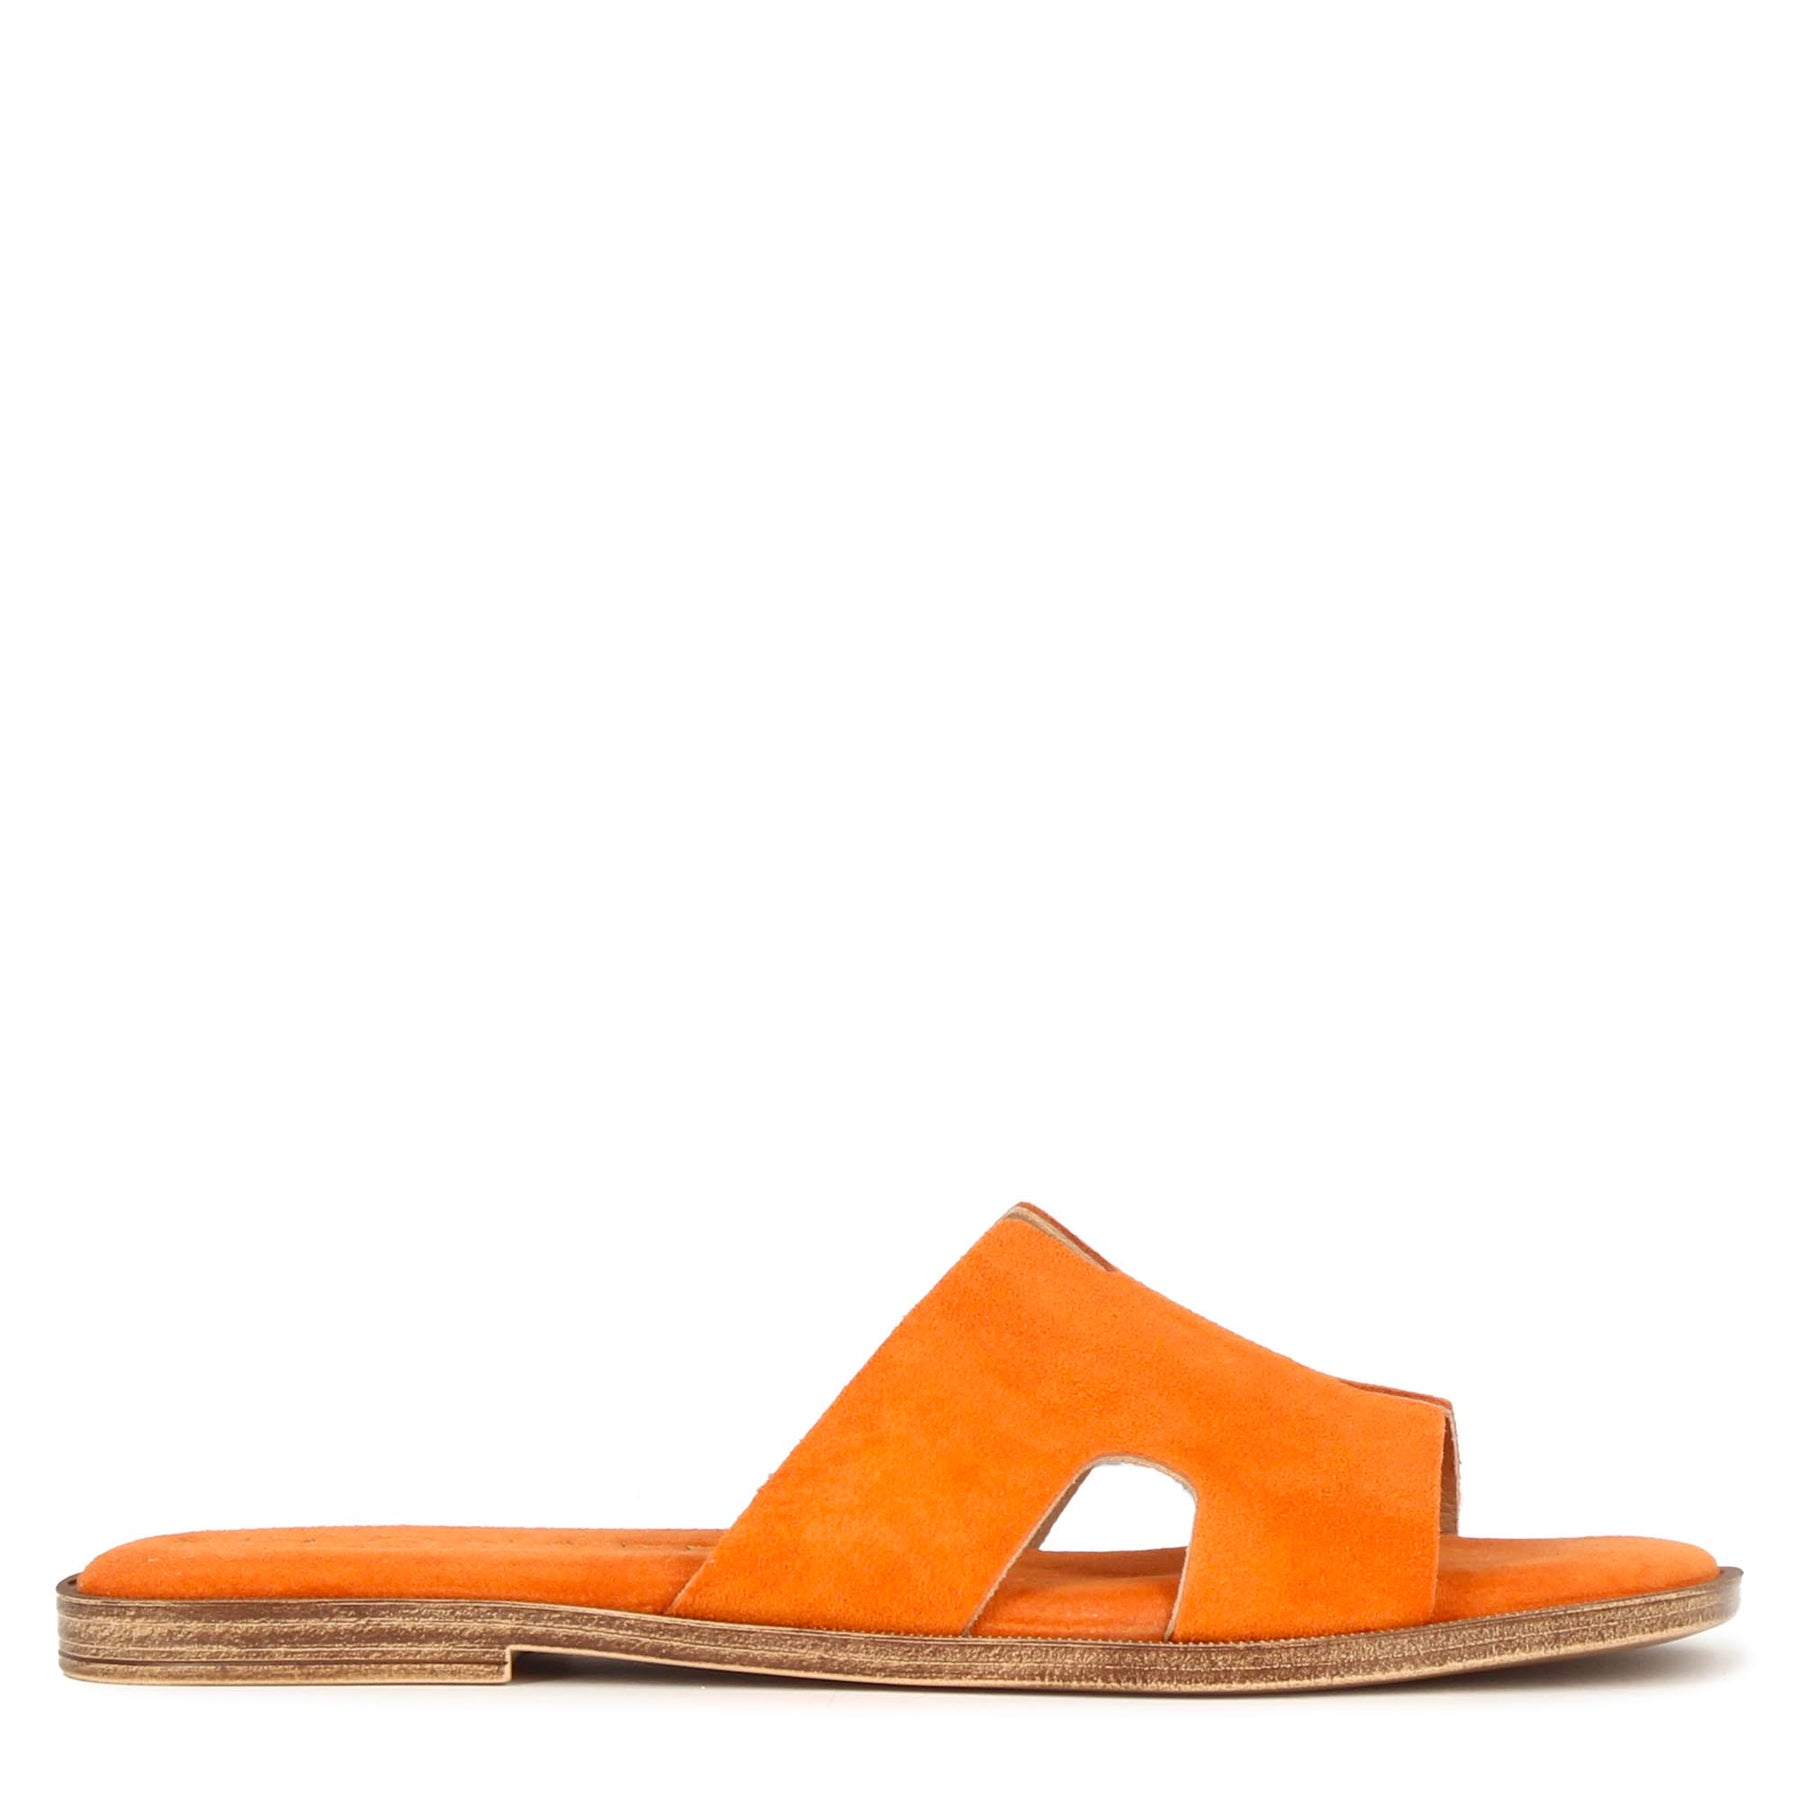 Women's orange suede slippers